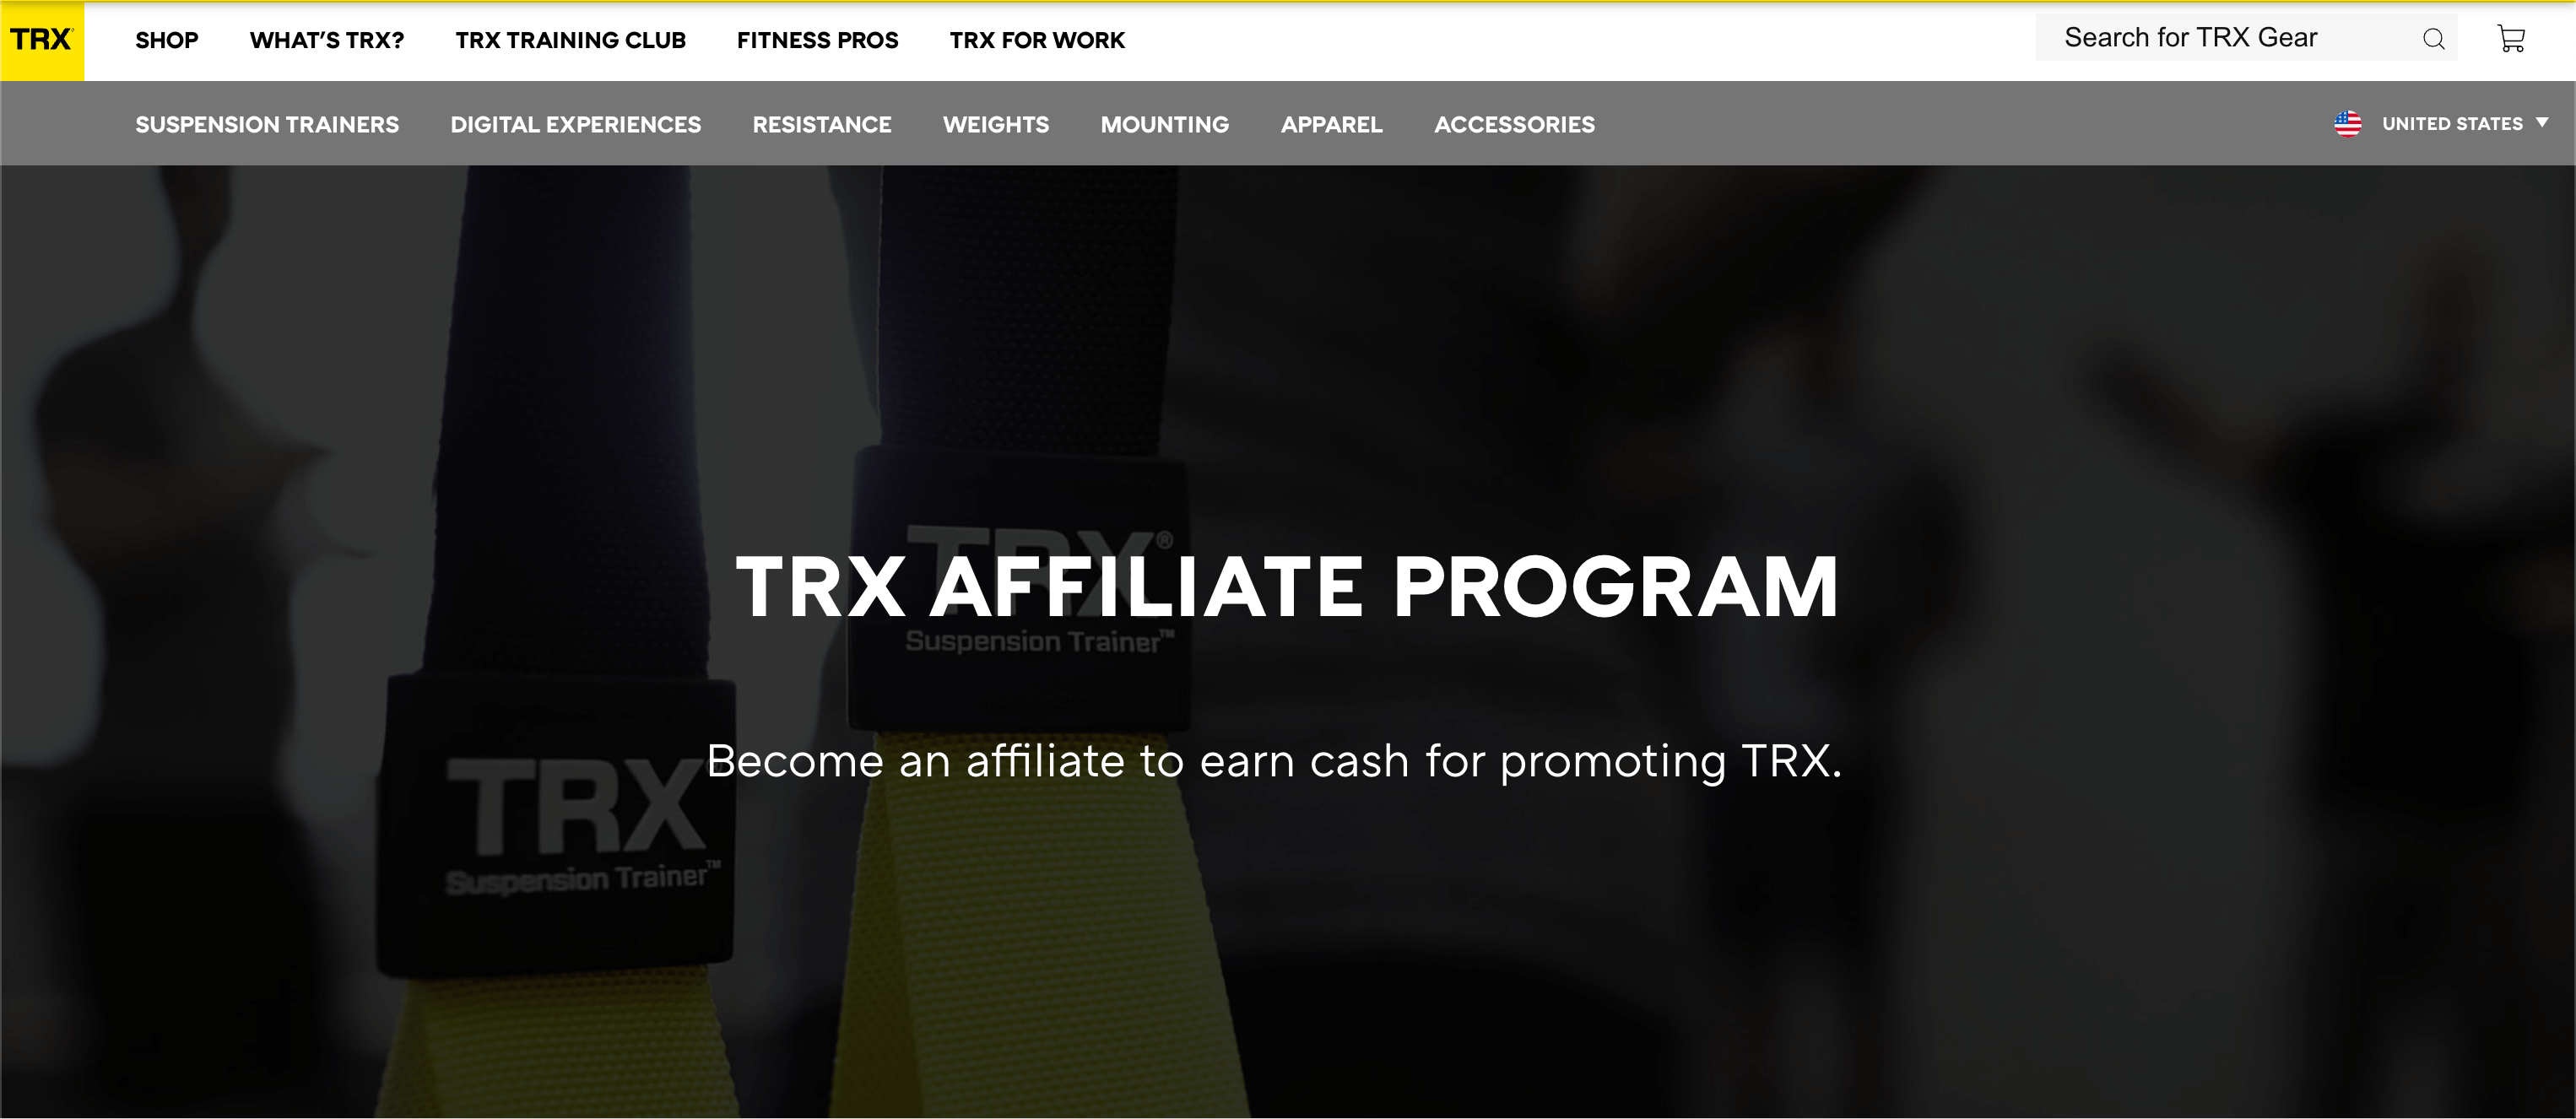 TRX Affiliate Program's homepage